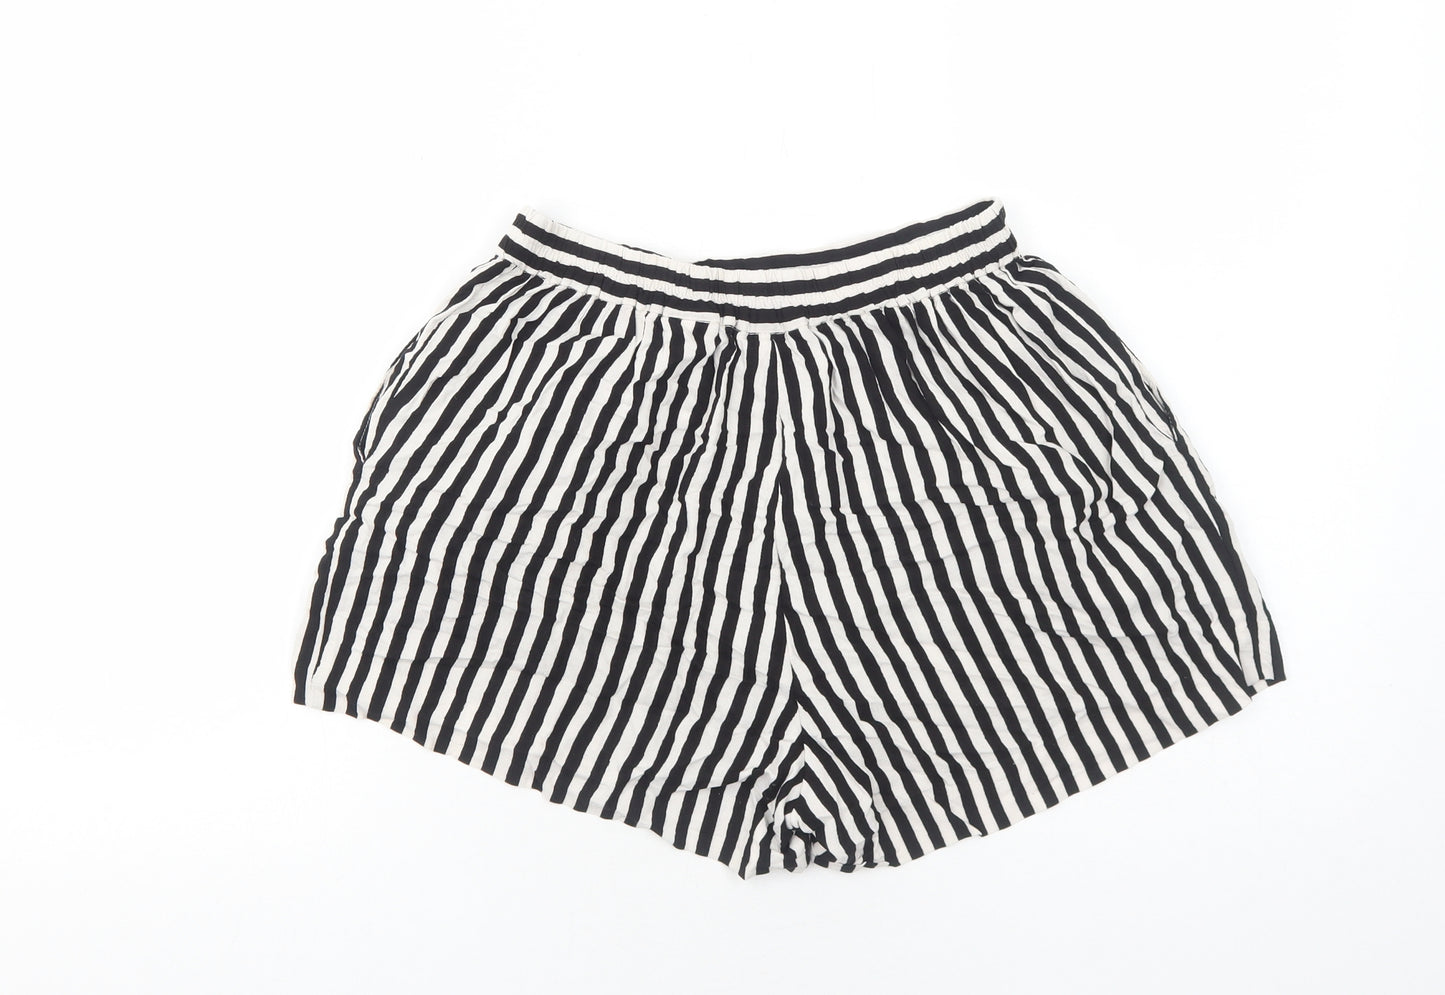 H&M Womens White Striped Viscose Basic Shorts Size 8 Regular Pull On